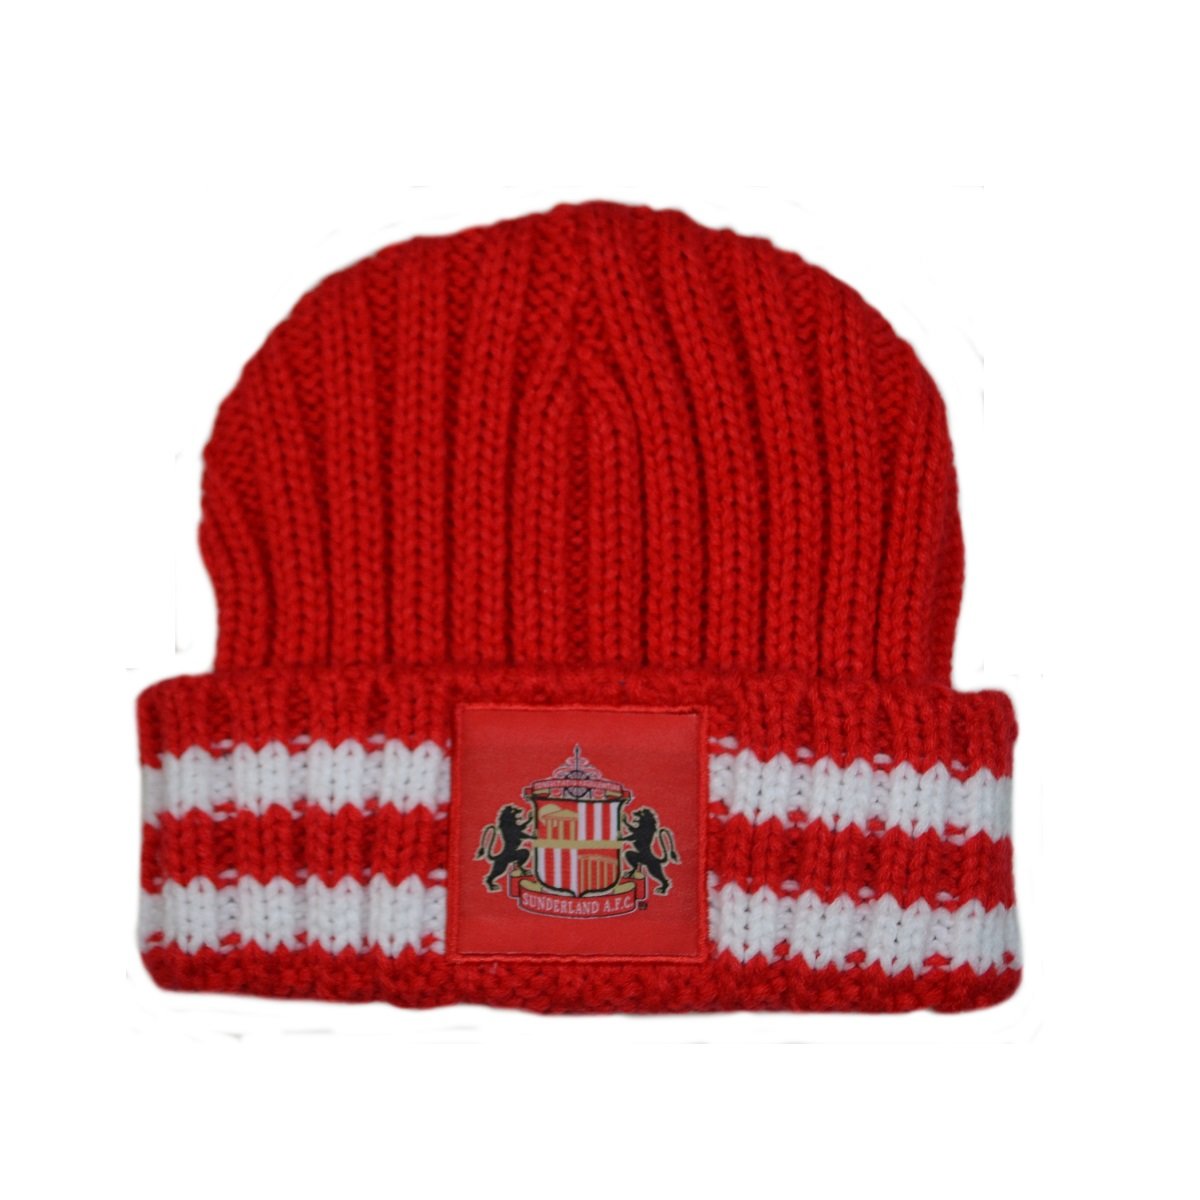 Buy the Wharfside Junior Hat online at Sunderland AFC Store